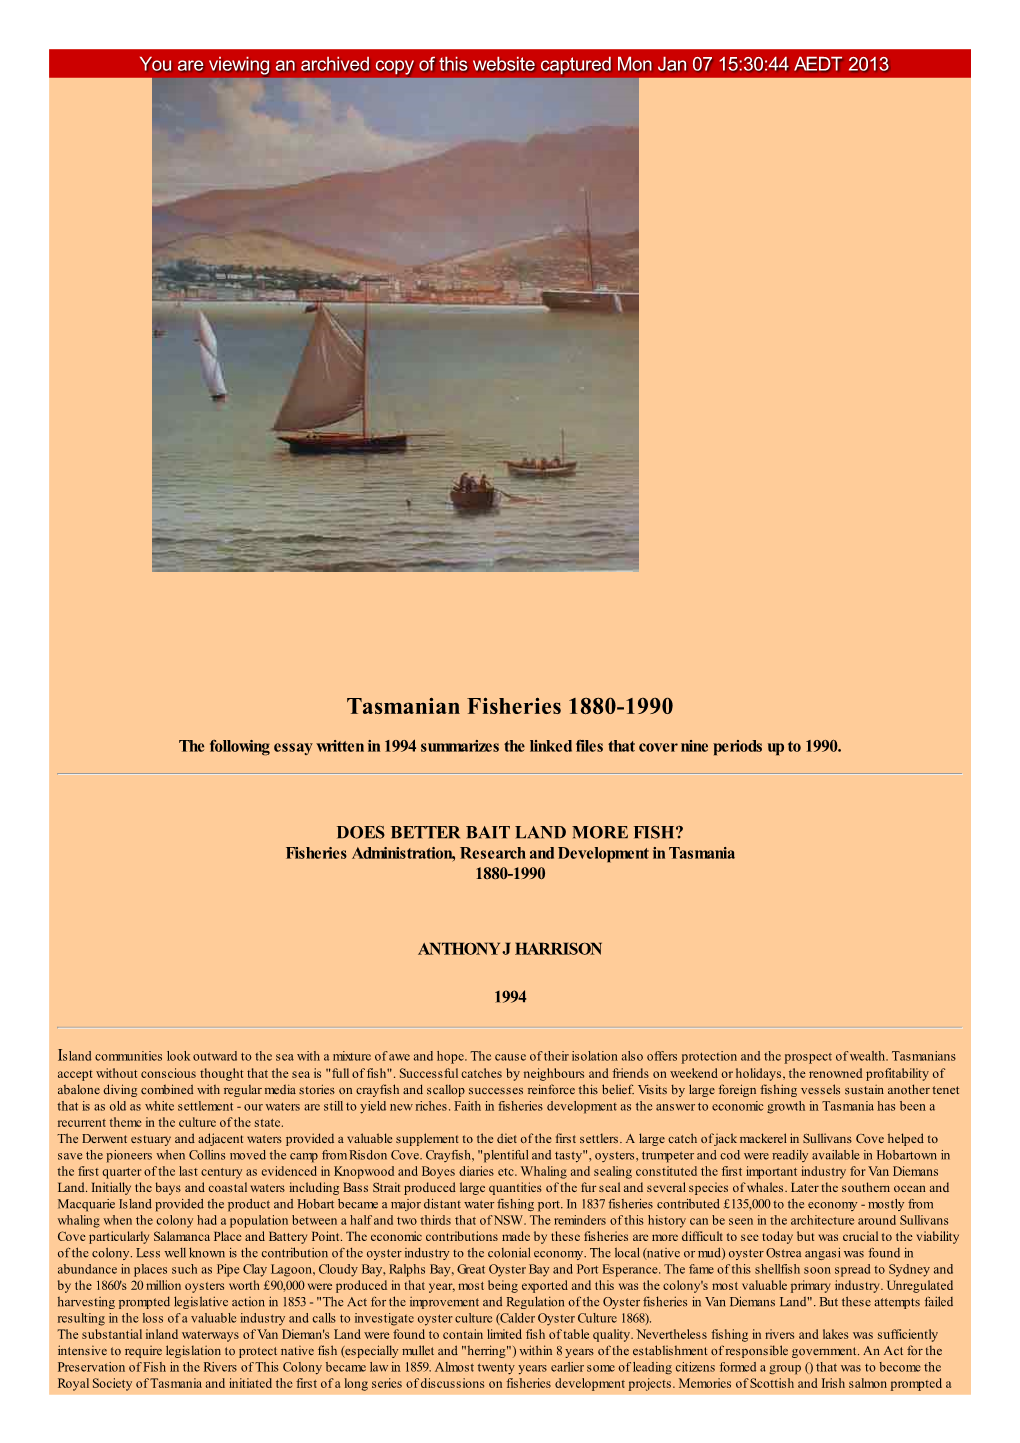 Tasmanian Fisheries History